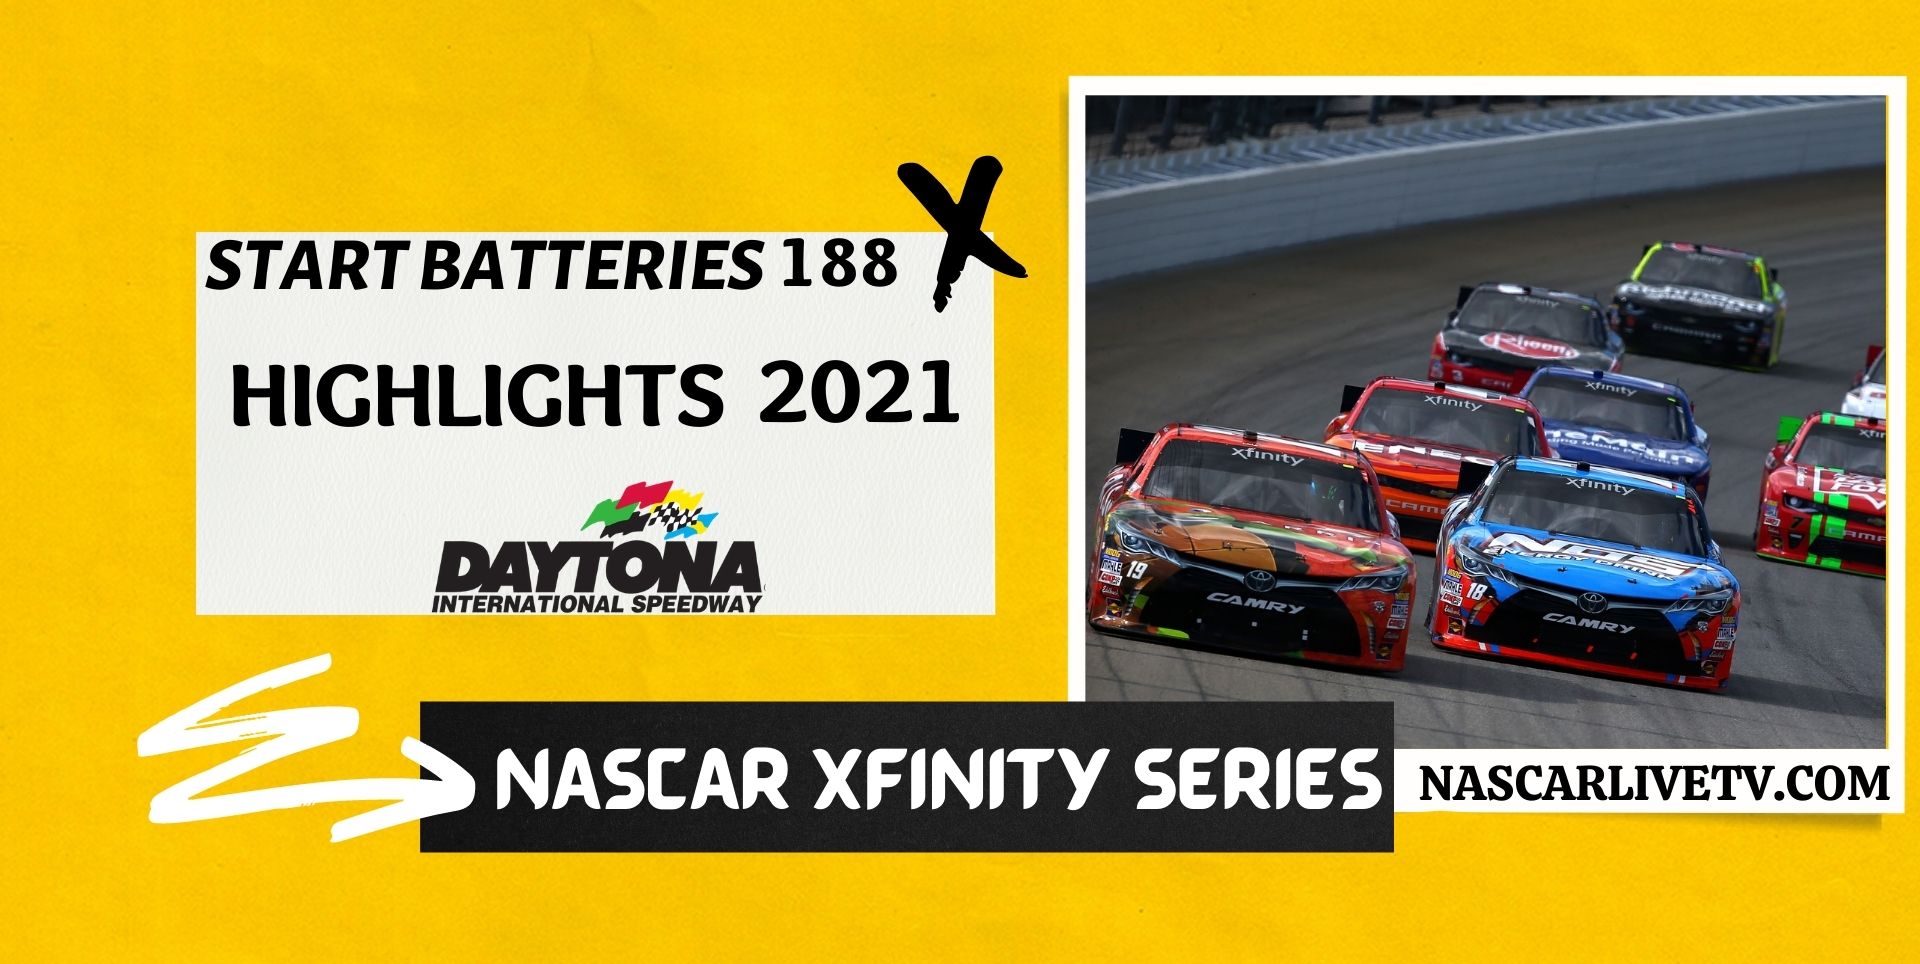 Start Batteries 188 Highlights  NASCAR Xfinity Series 2021